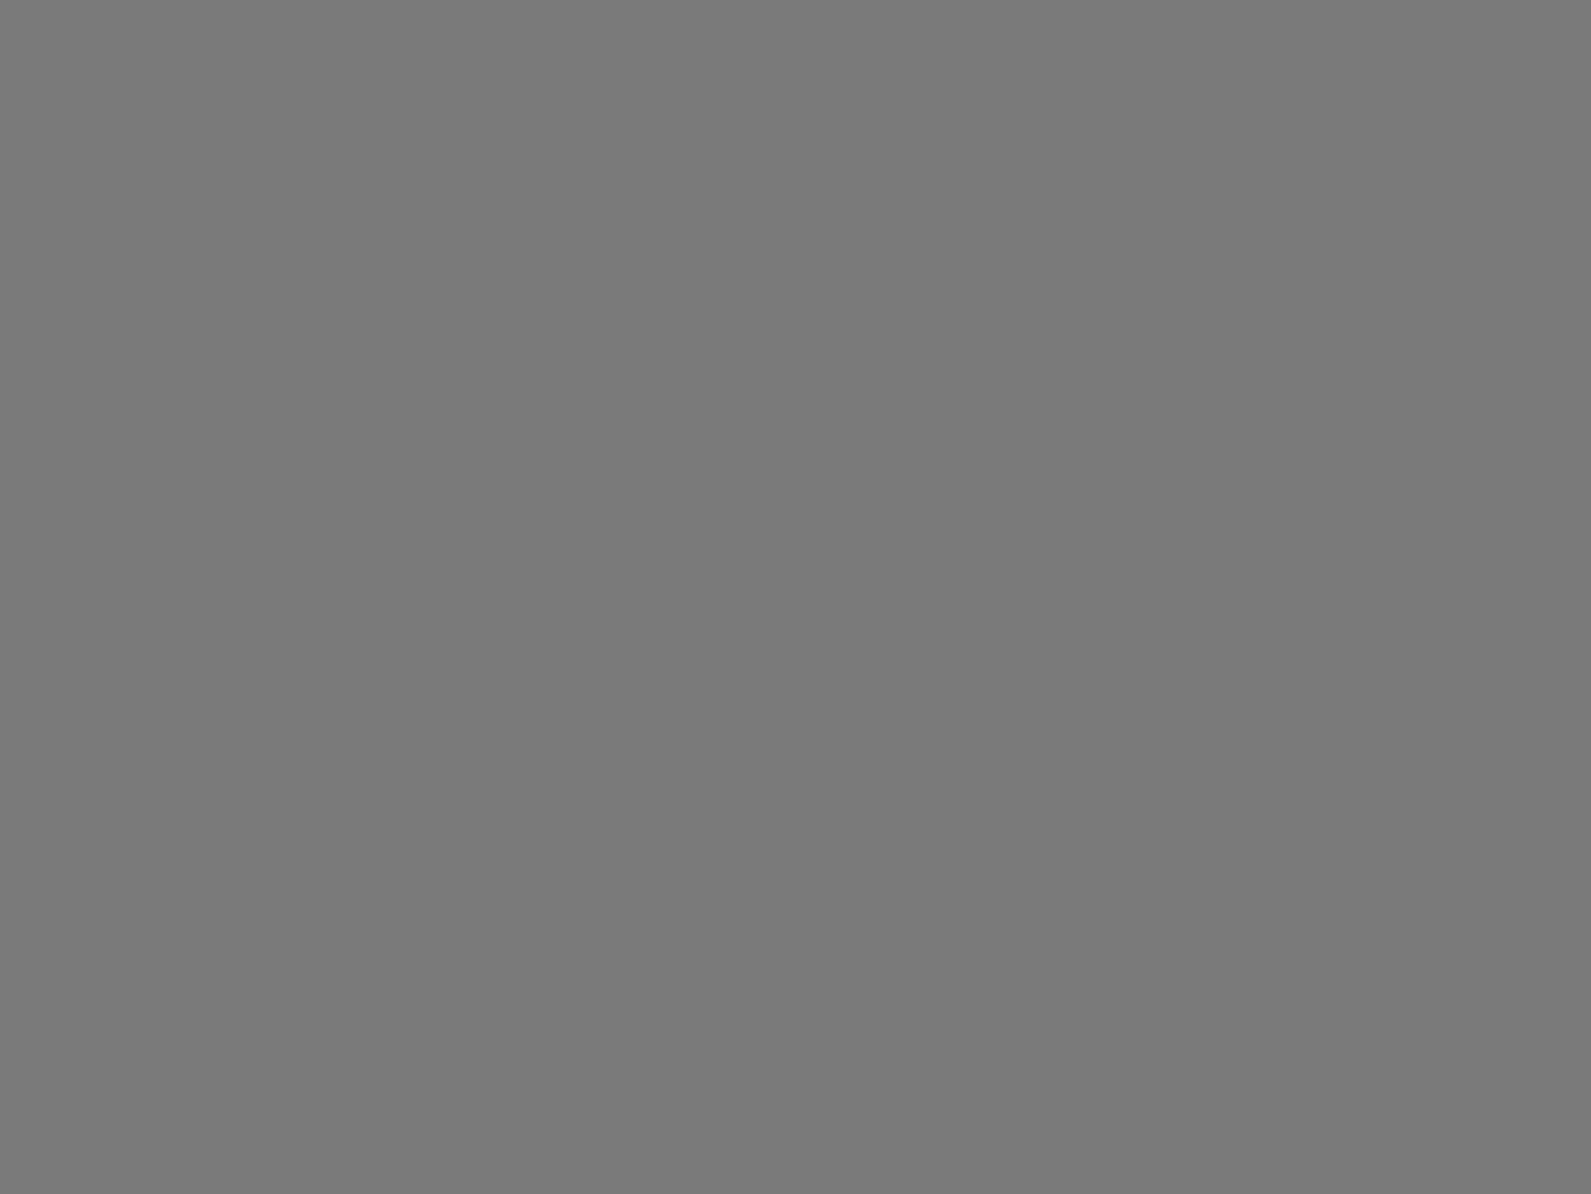 Узбекская чайхана. Выставка достижений народного хозяйства. Москва. Фотография: <a href="https://vdnh.ru/places/uzbekskaya-chaykhana_old/#gallery-2" target="_blank" rel="noopener">vdnh.ru</a>